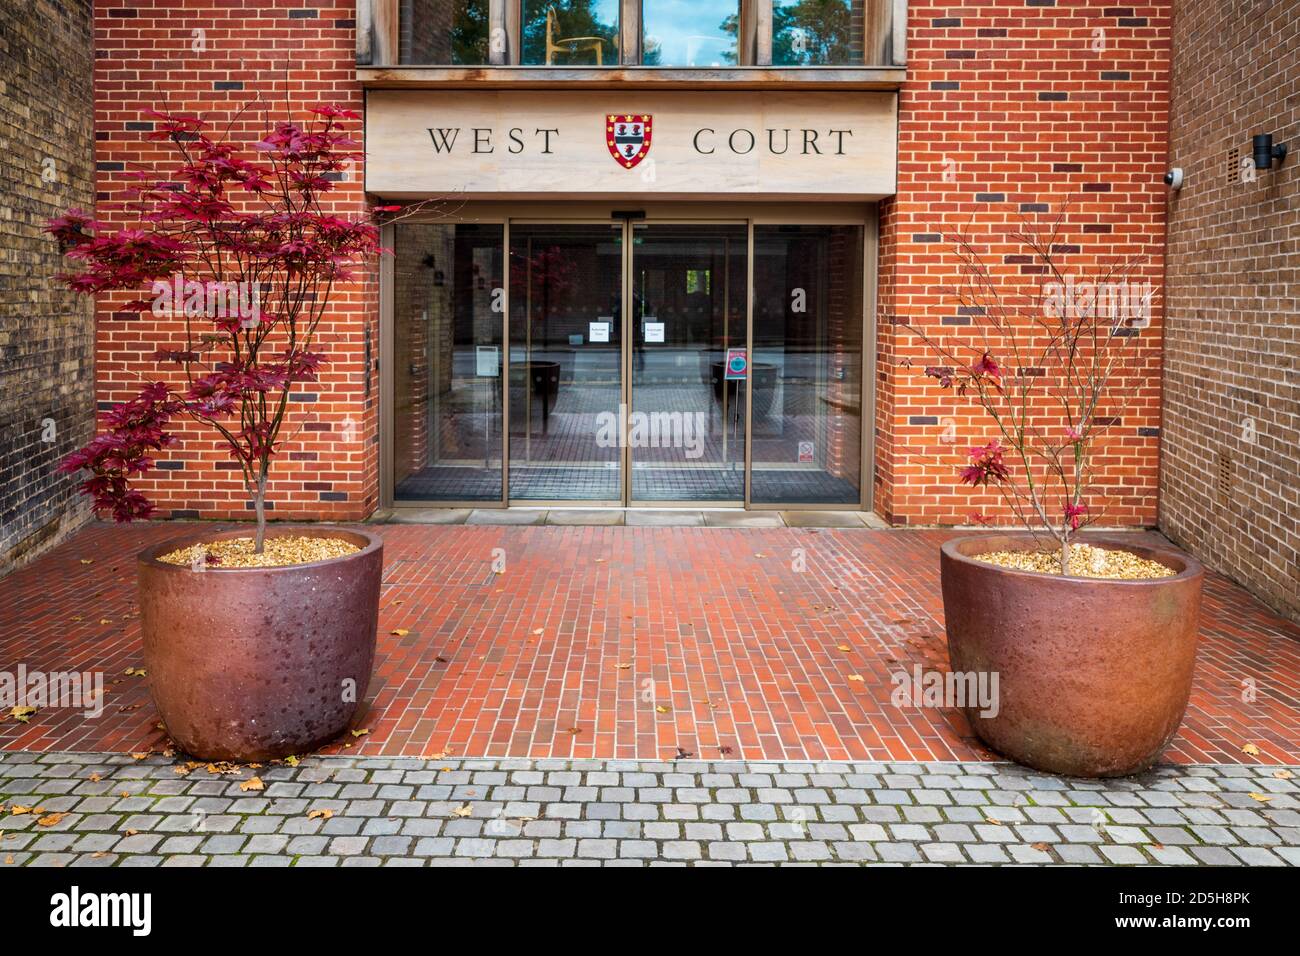 Jesus College Cambridge corte occidental - Entrada del nuevo Auditorio de corte occidental y Foro - Arquitectura - Cambridge Níall McLaughlin Architects - 2017 Foto de stock